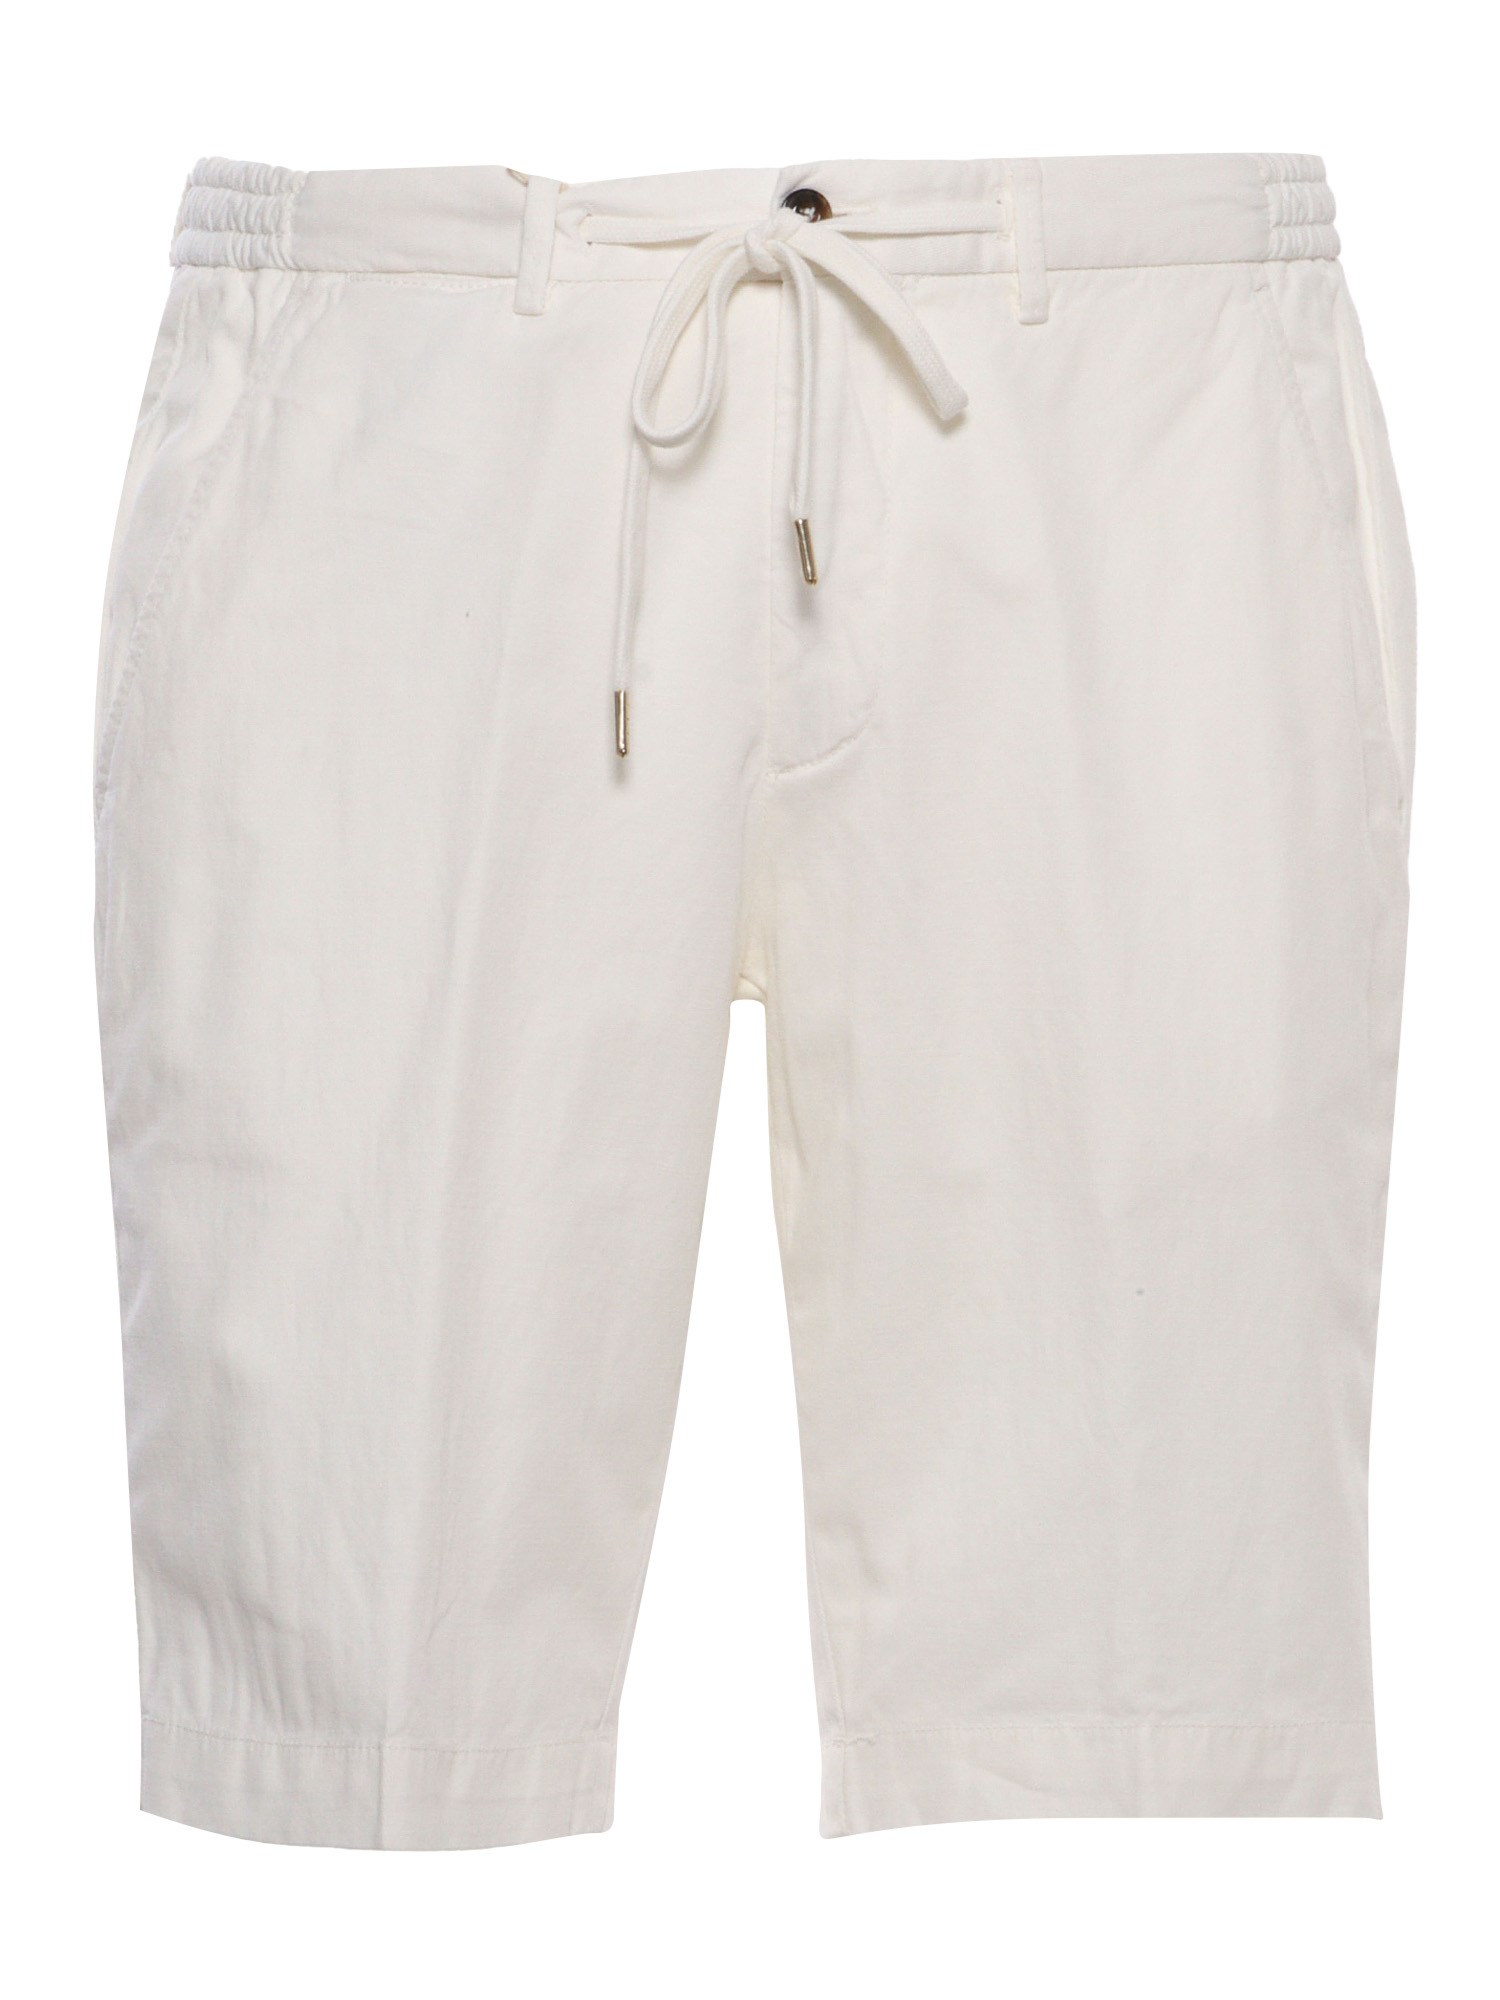 Briglia White Bermuda Shorts